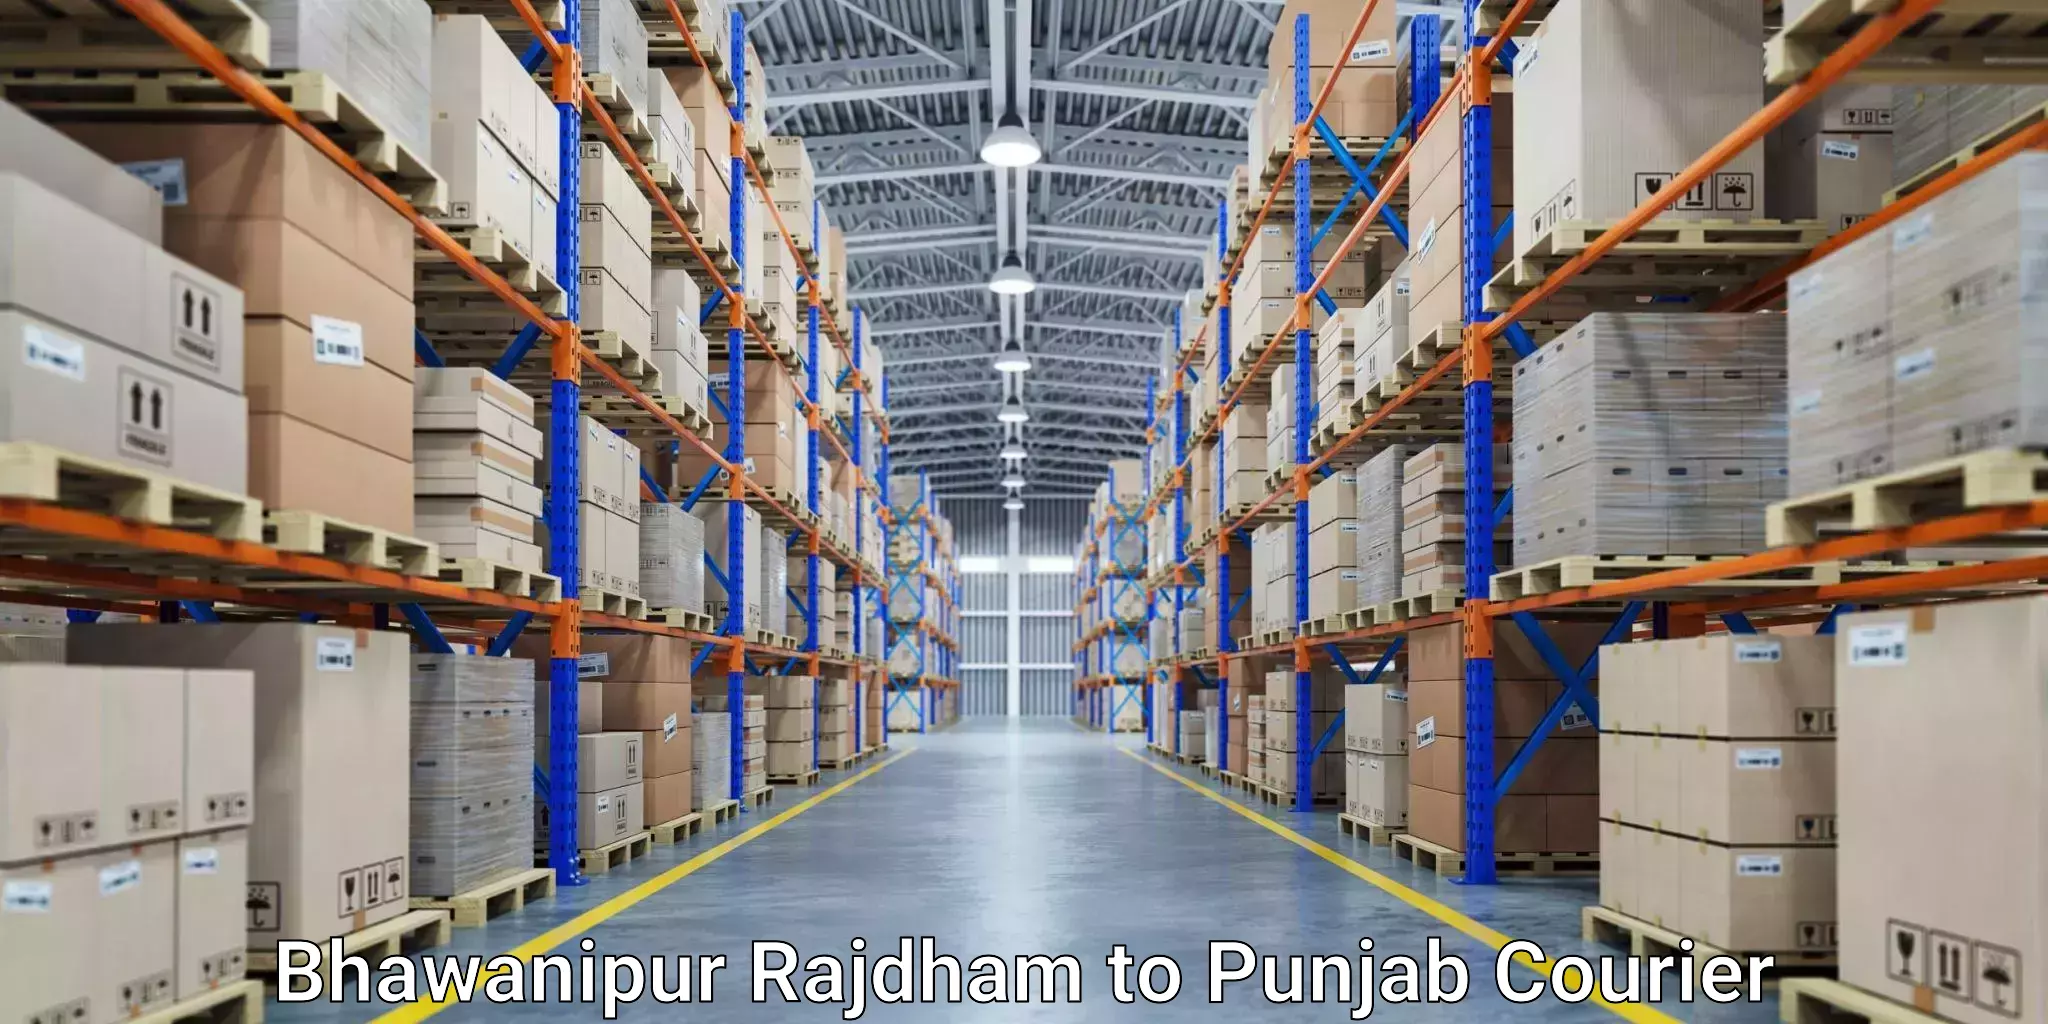 Business shipping needs Bhawanipur Rajdham to Khanna